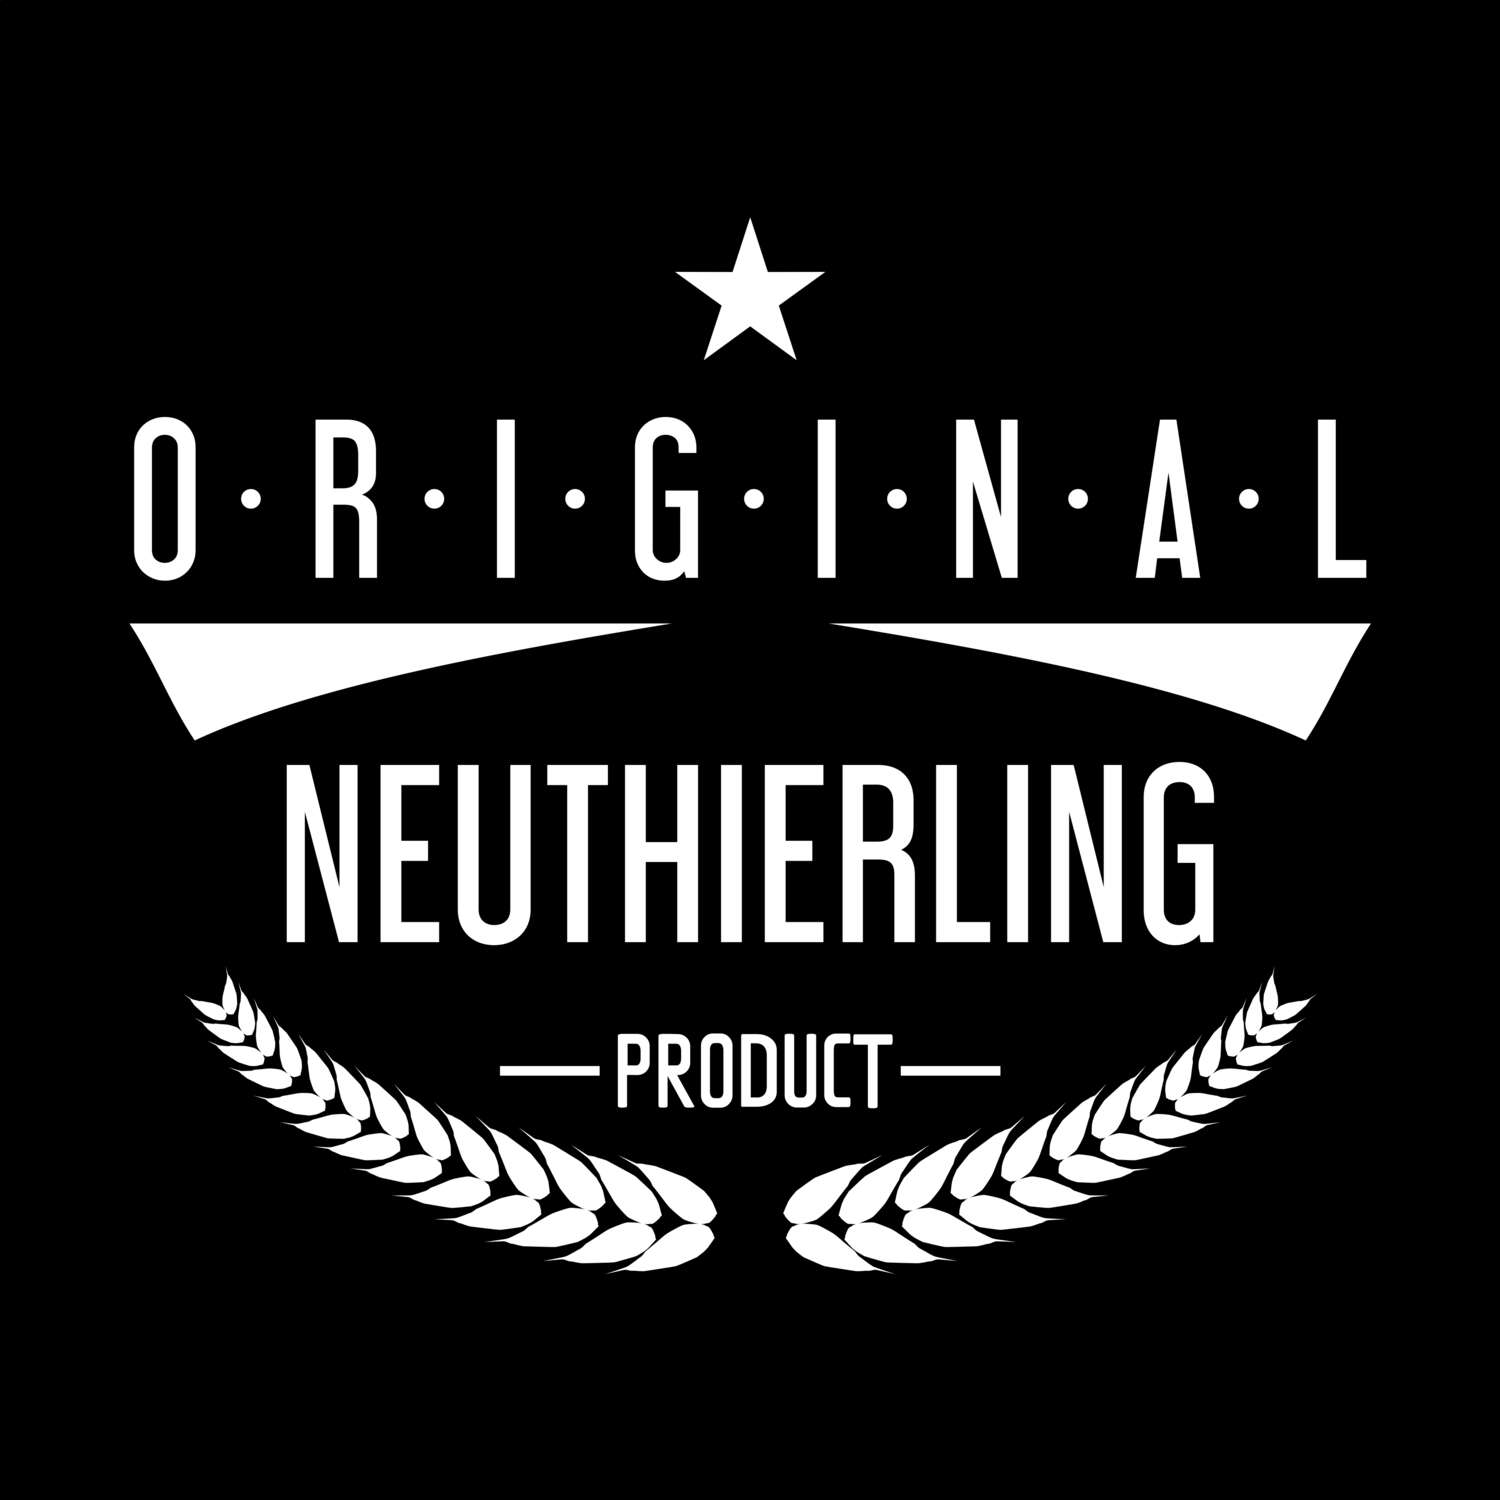 Neuthierling T-Shirt »Original Product«